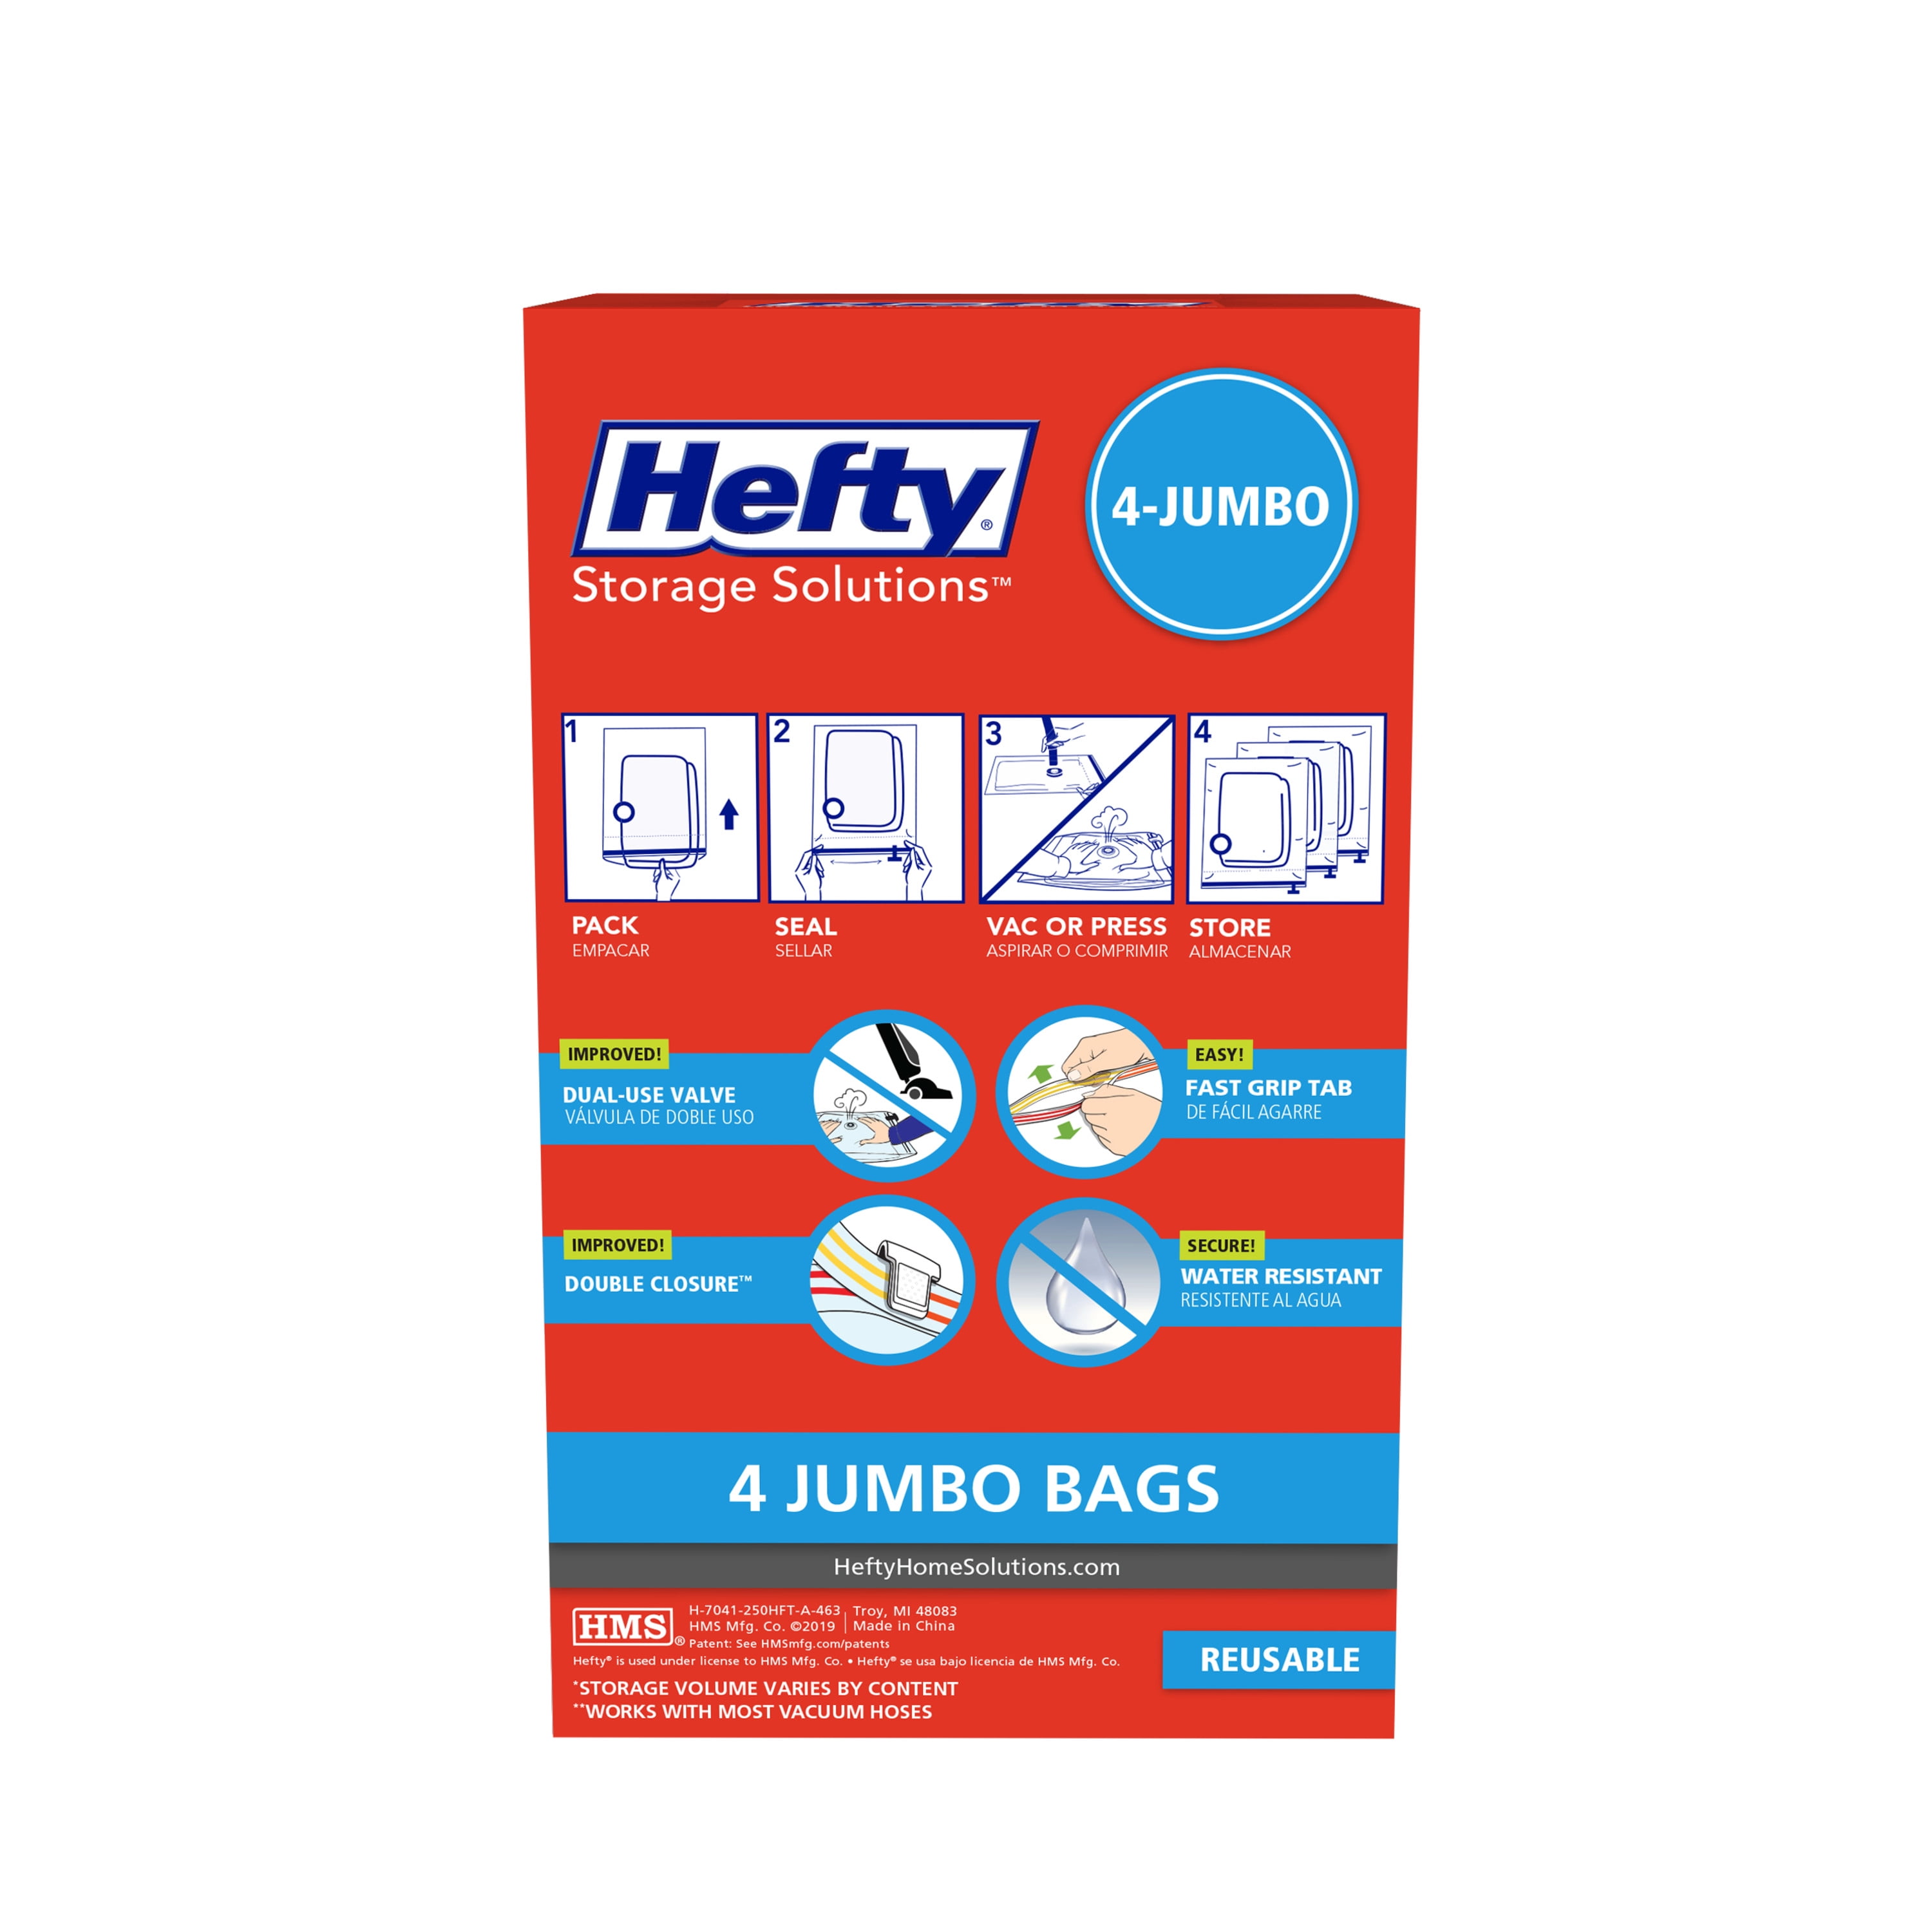 Hefty Shrink-Pak - 3 Jumbo Vacuum Storage Bags for Under Bed 3